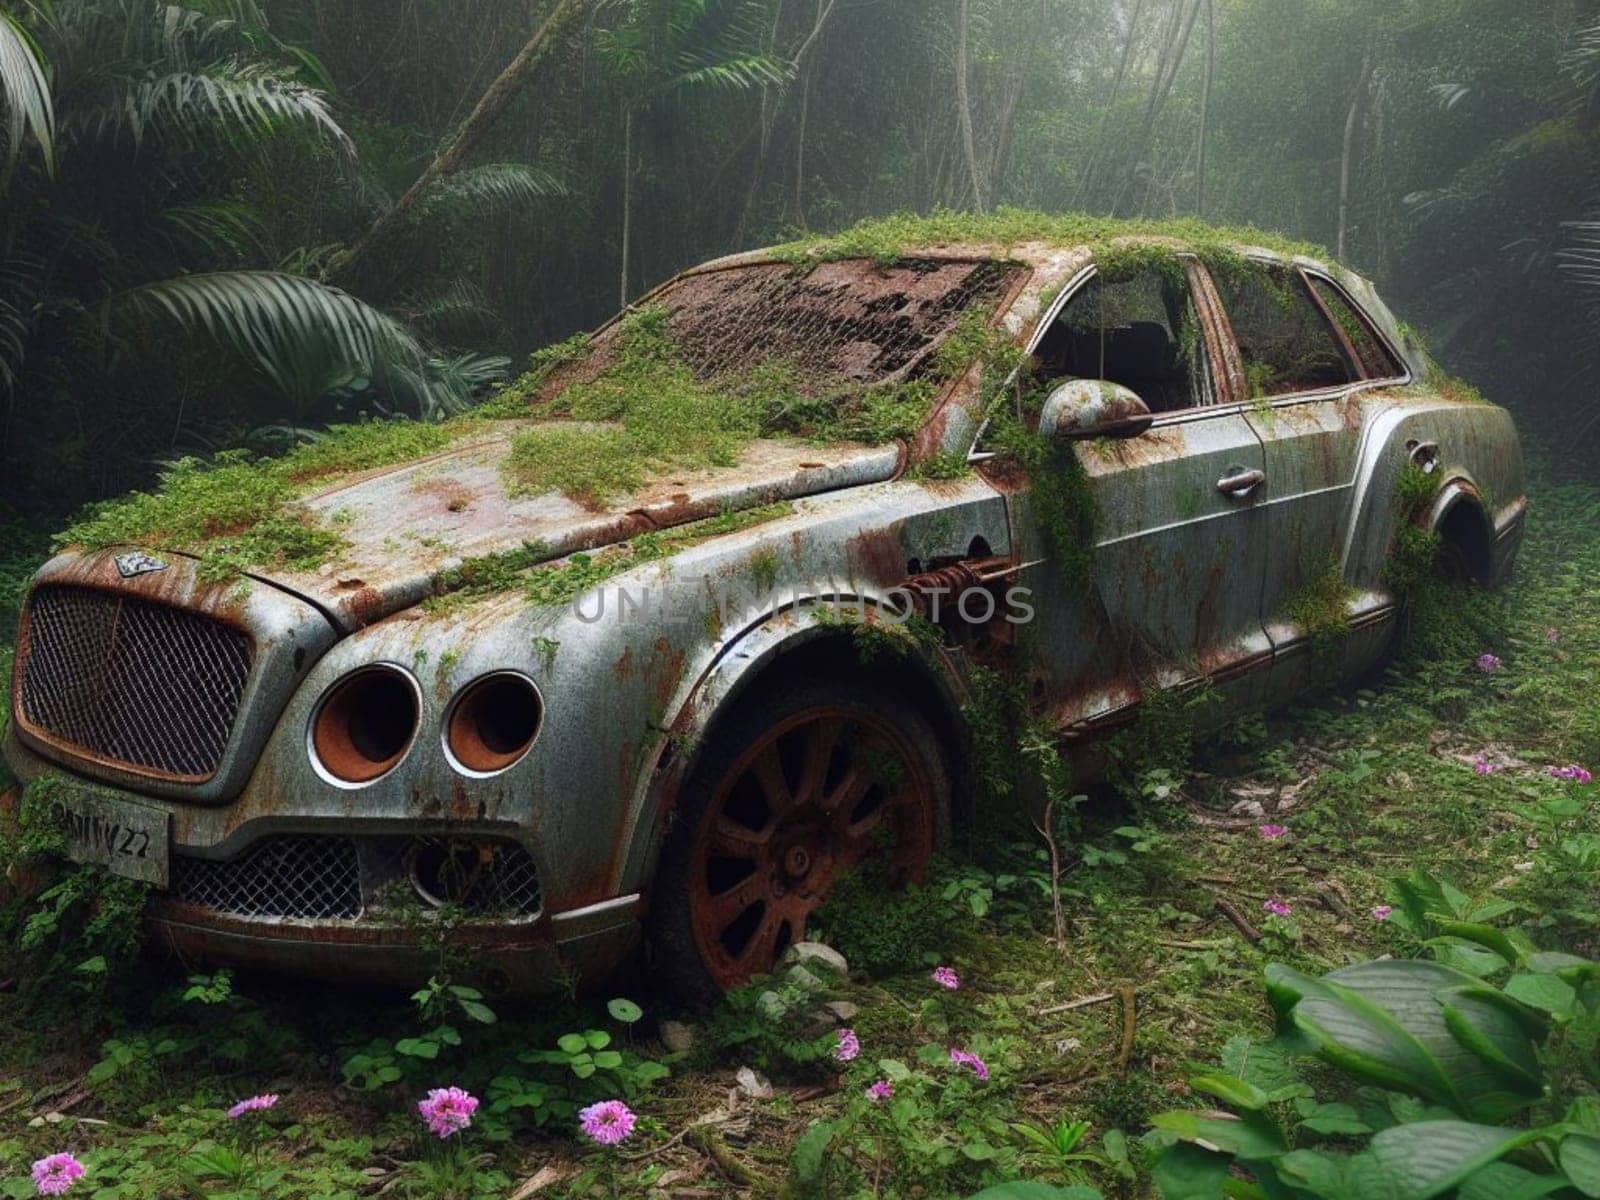 Abandoned rusty petrol luxury sedan car banned for co2 emission agenda, growth plants bloom flowers by verbano